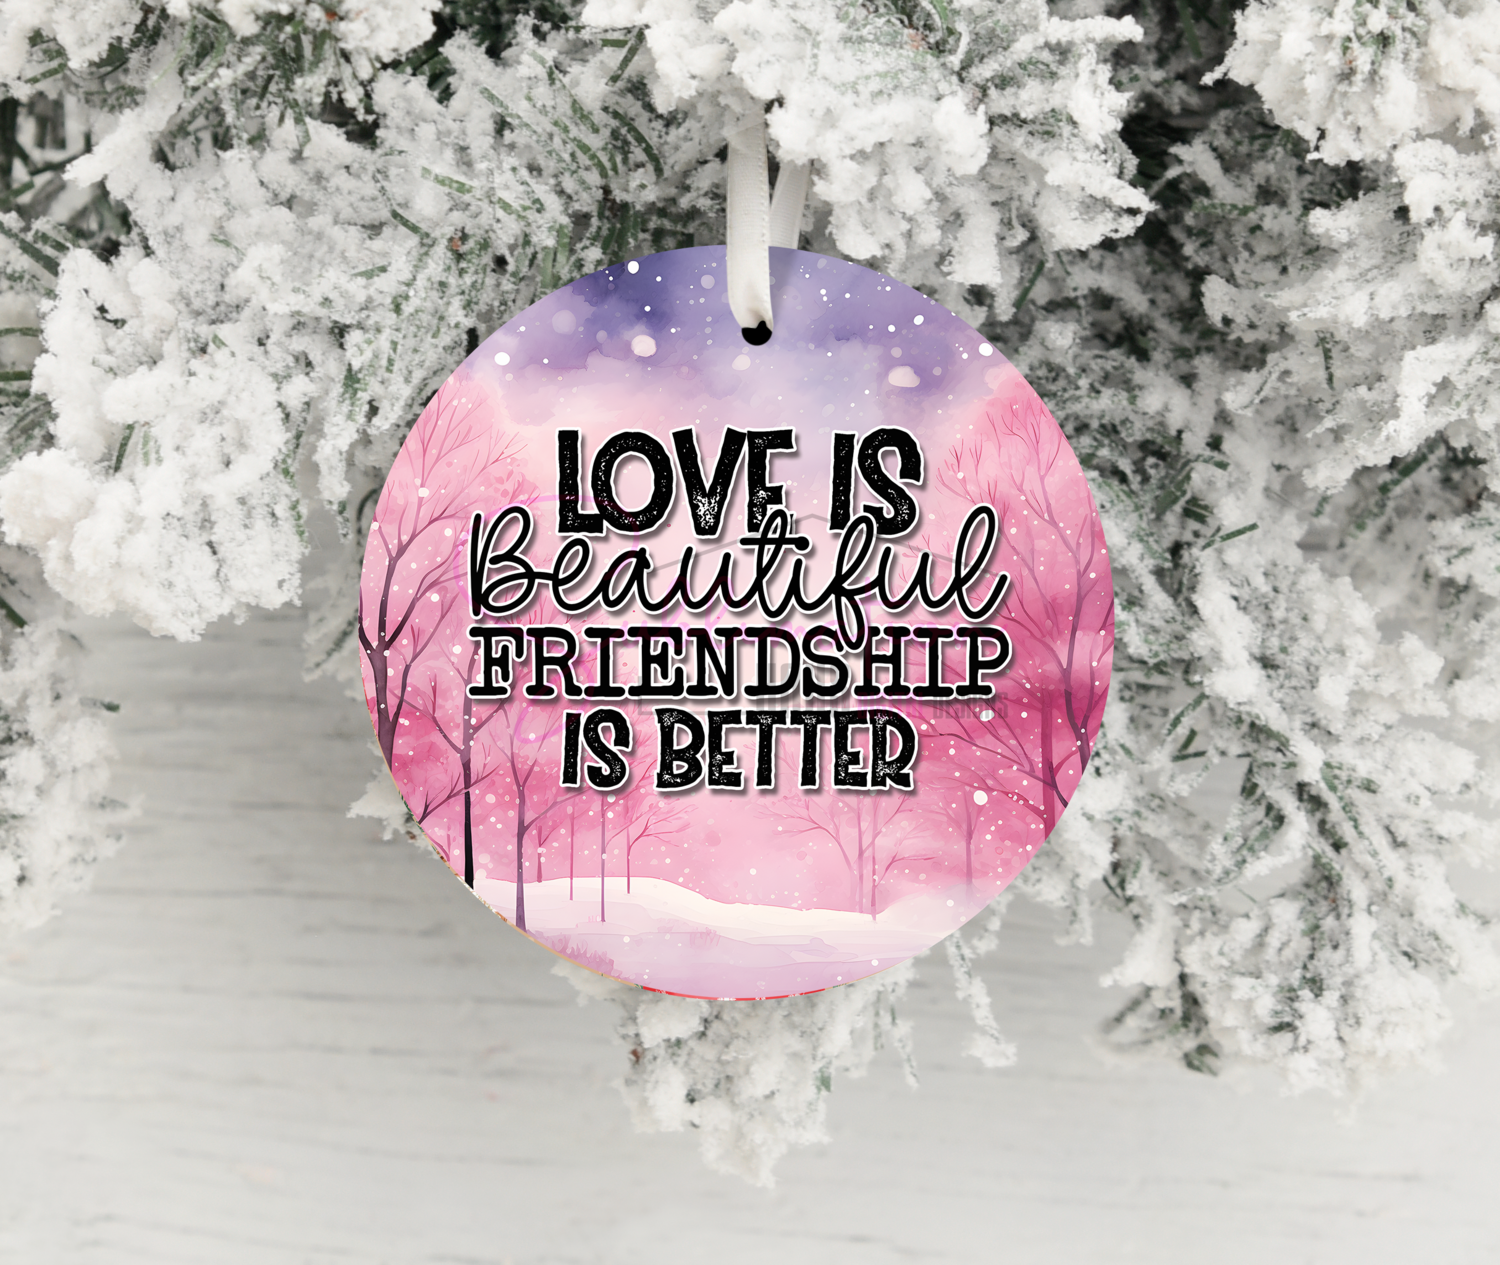 Love is beautiful friendship is better